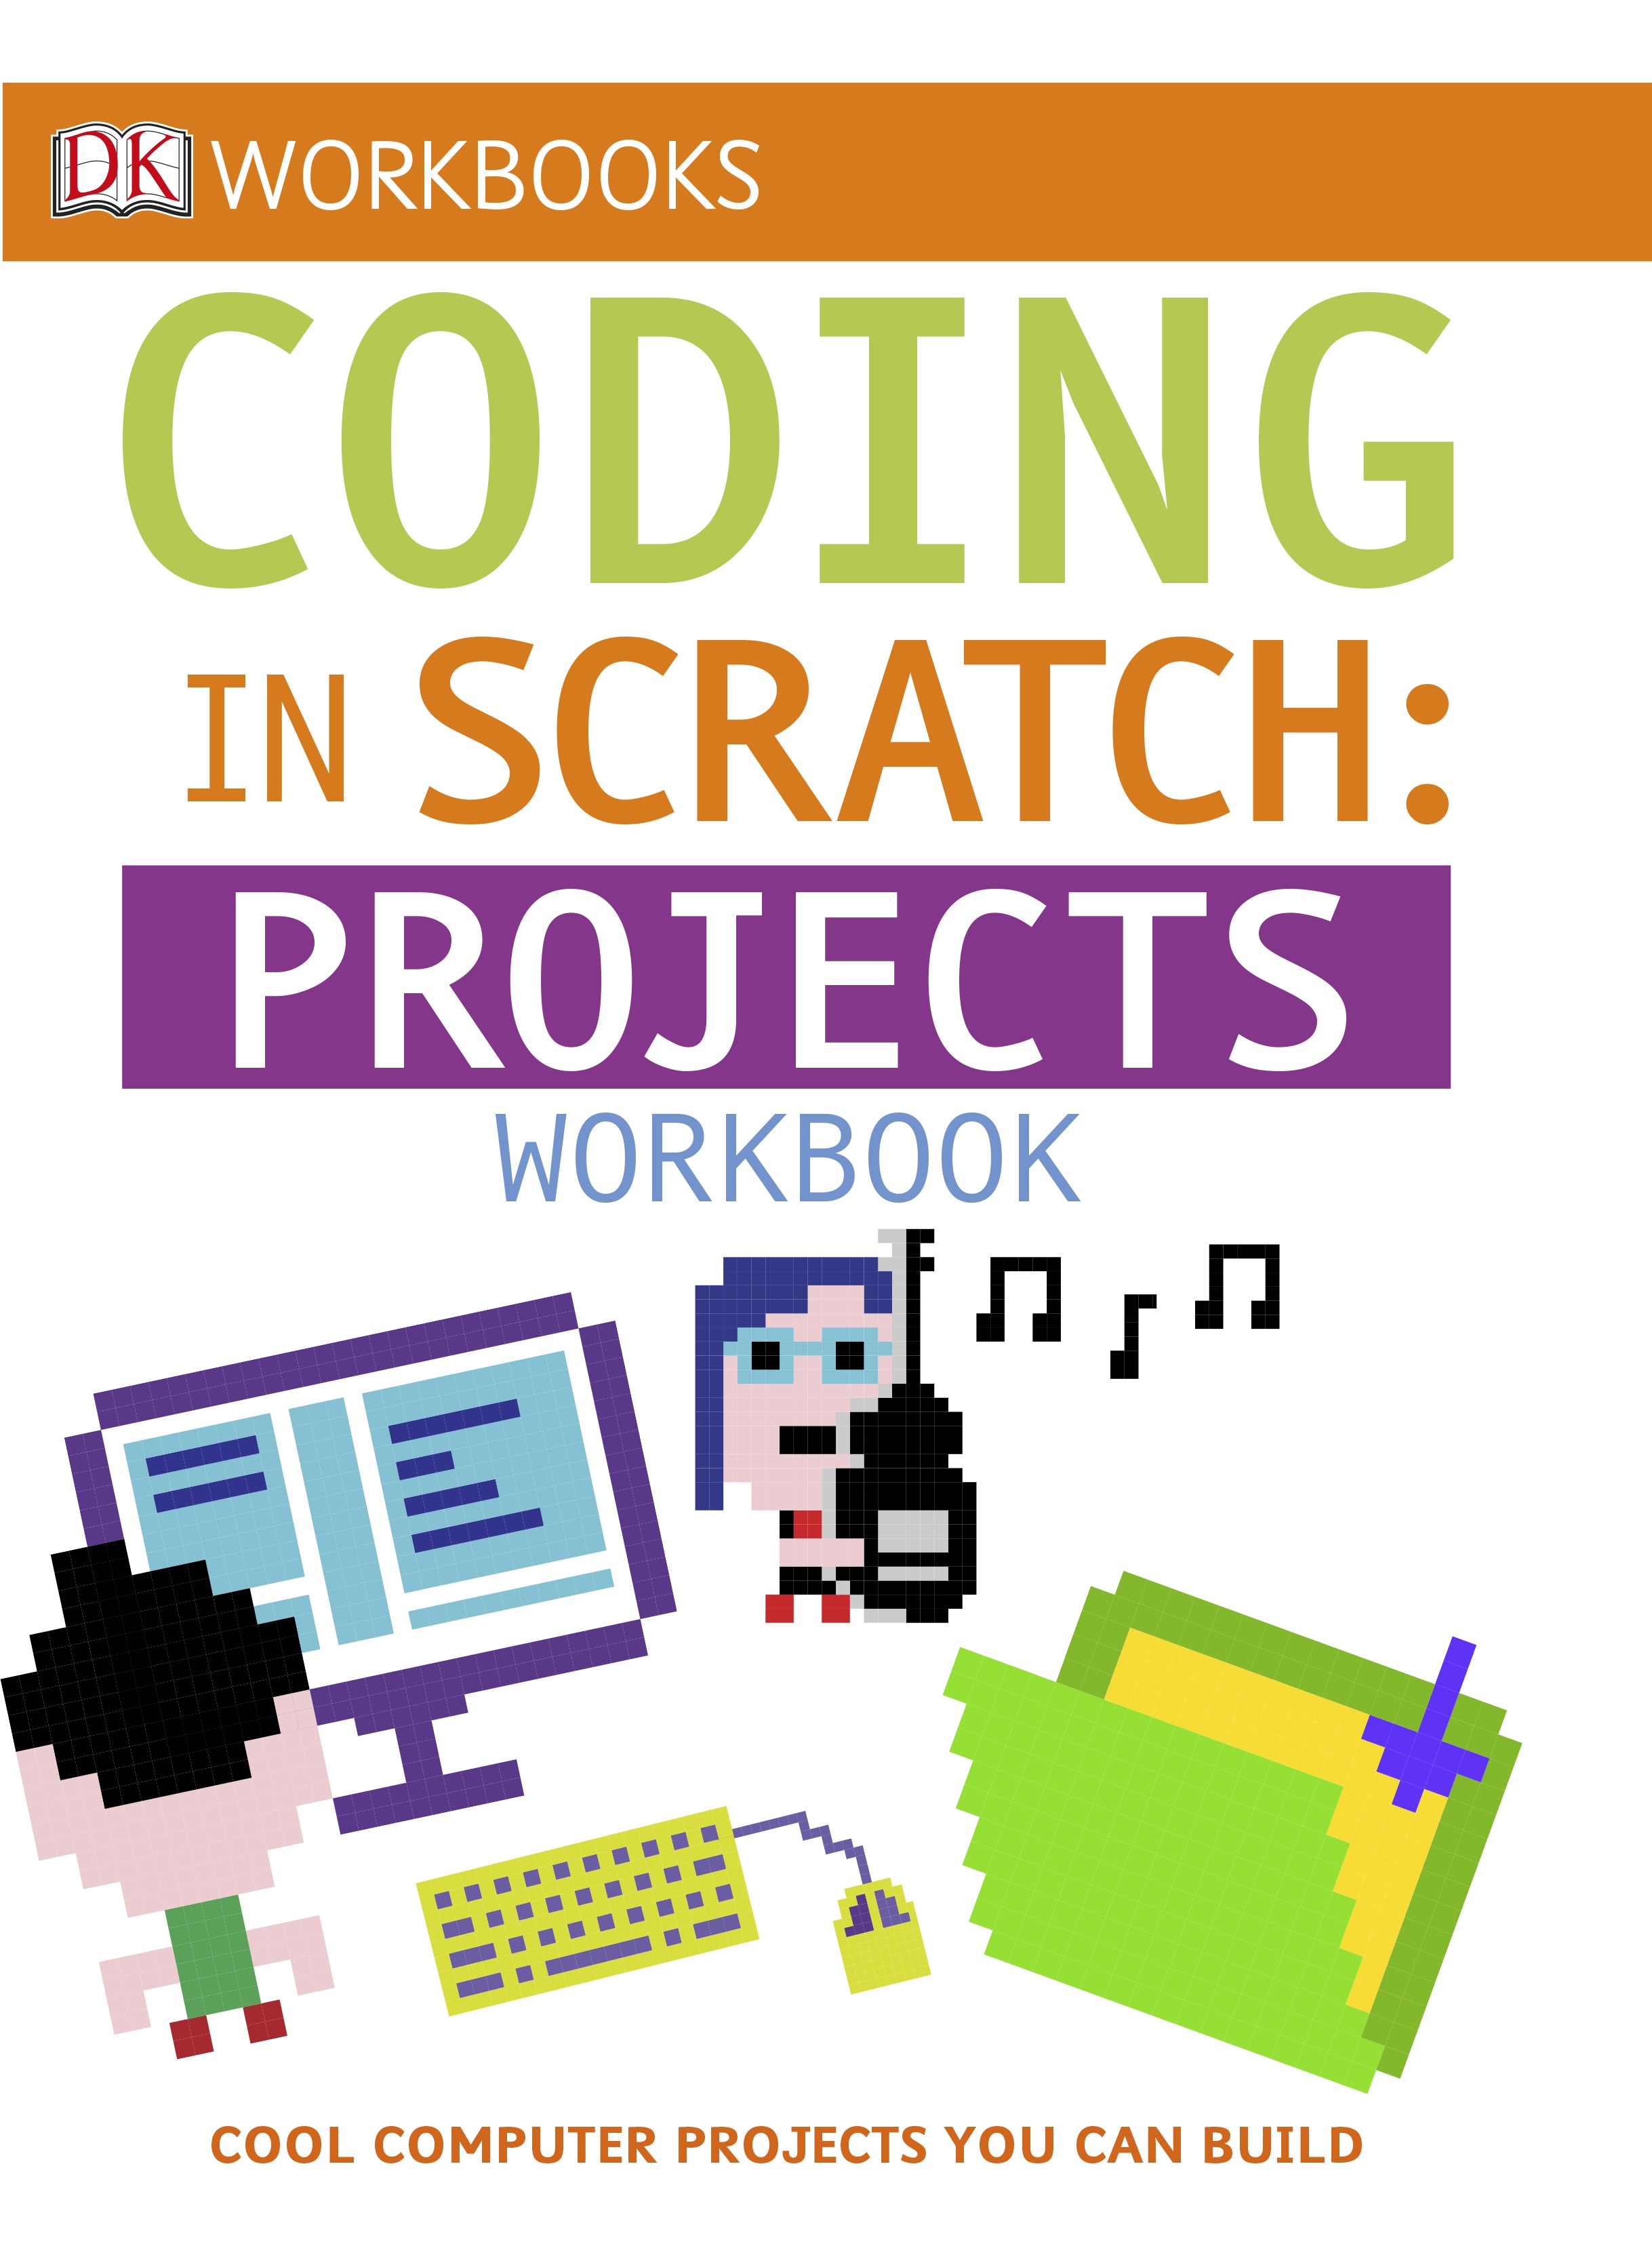 DK Workbooks: Coding in Scratch: Games Workbook